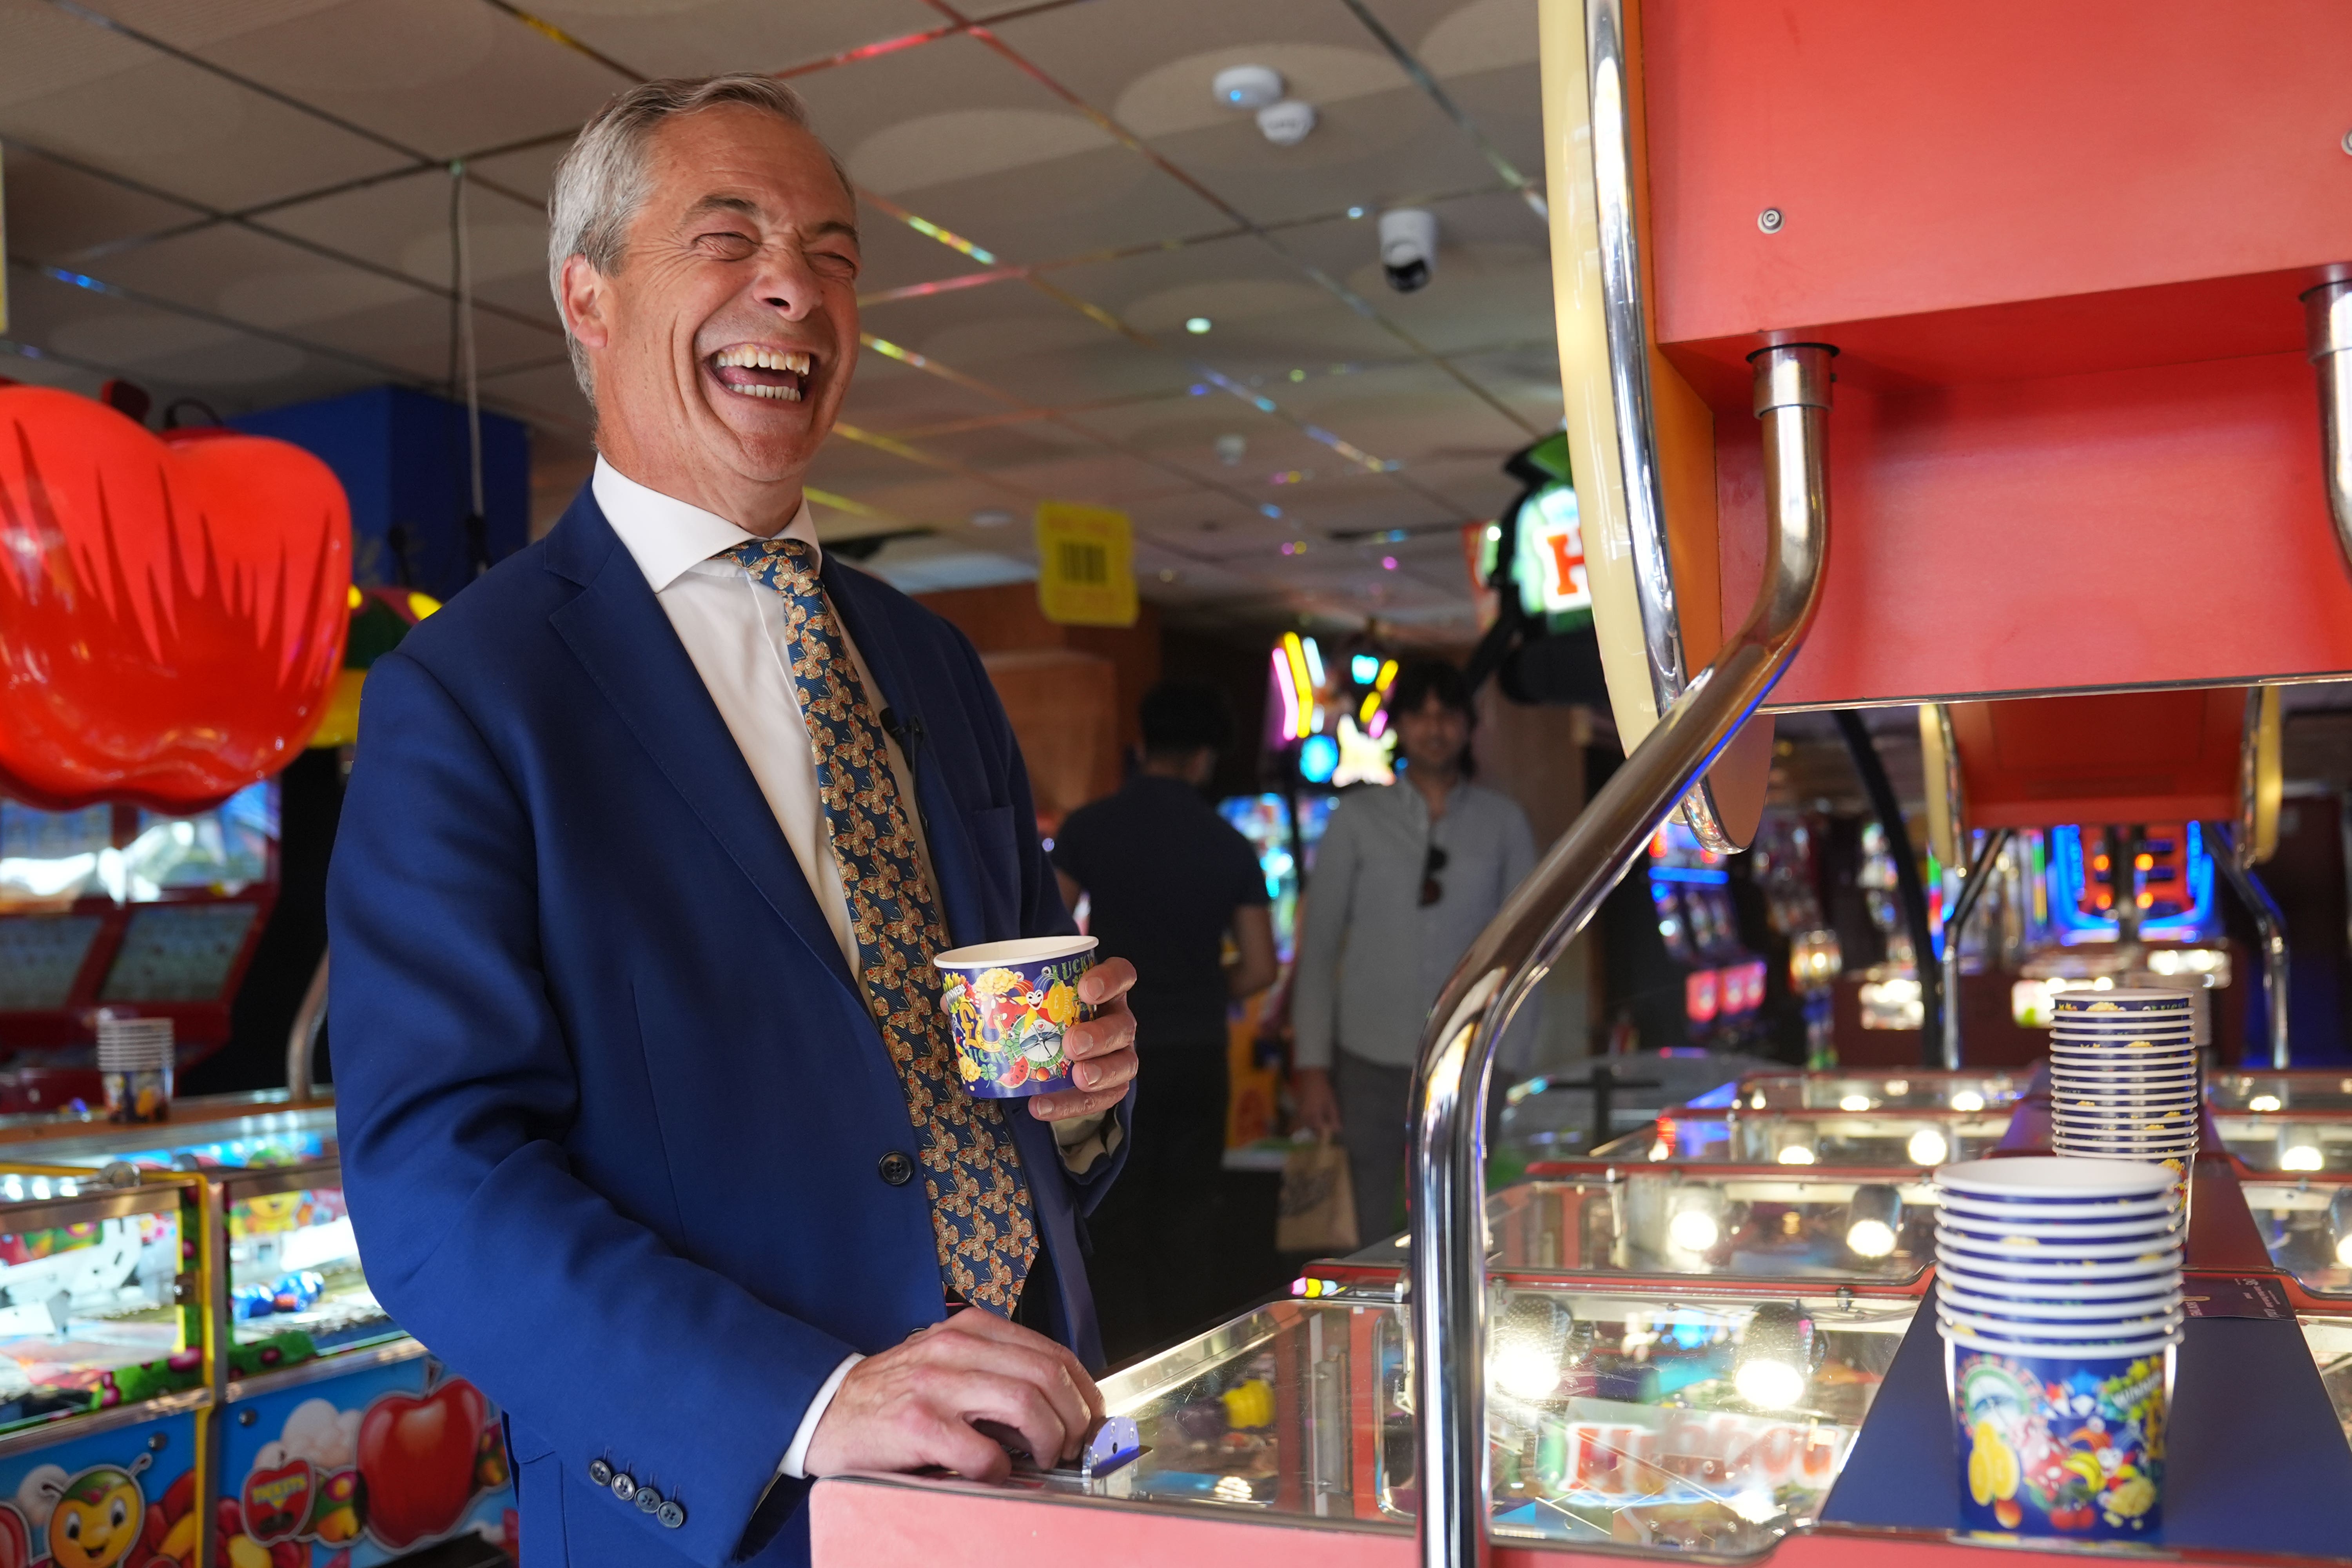 Reform UK leader Nigel Farage campaigned in Clacton-on-Sea, Essex (PA)